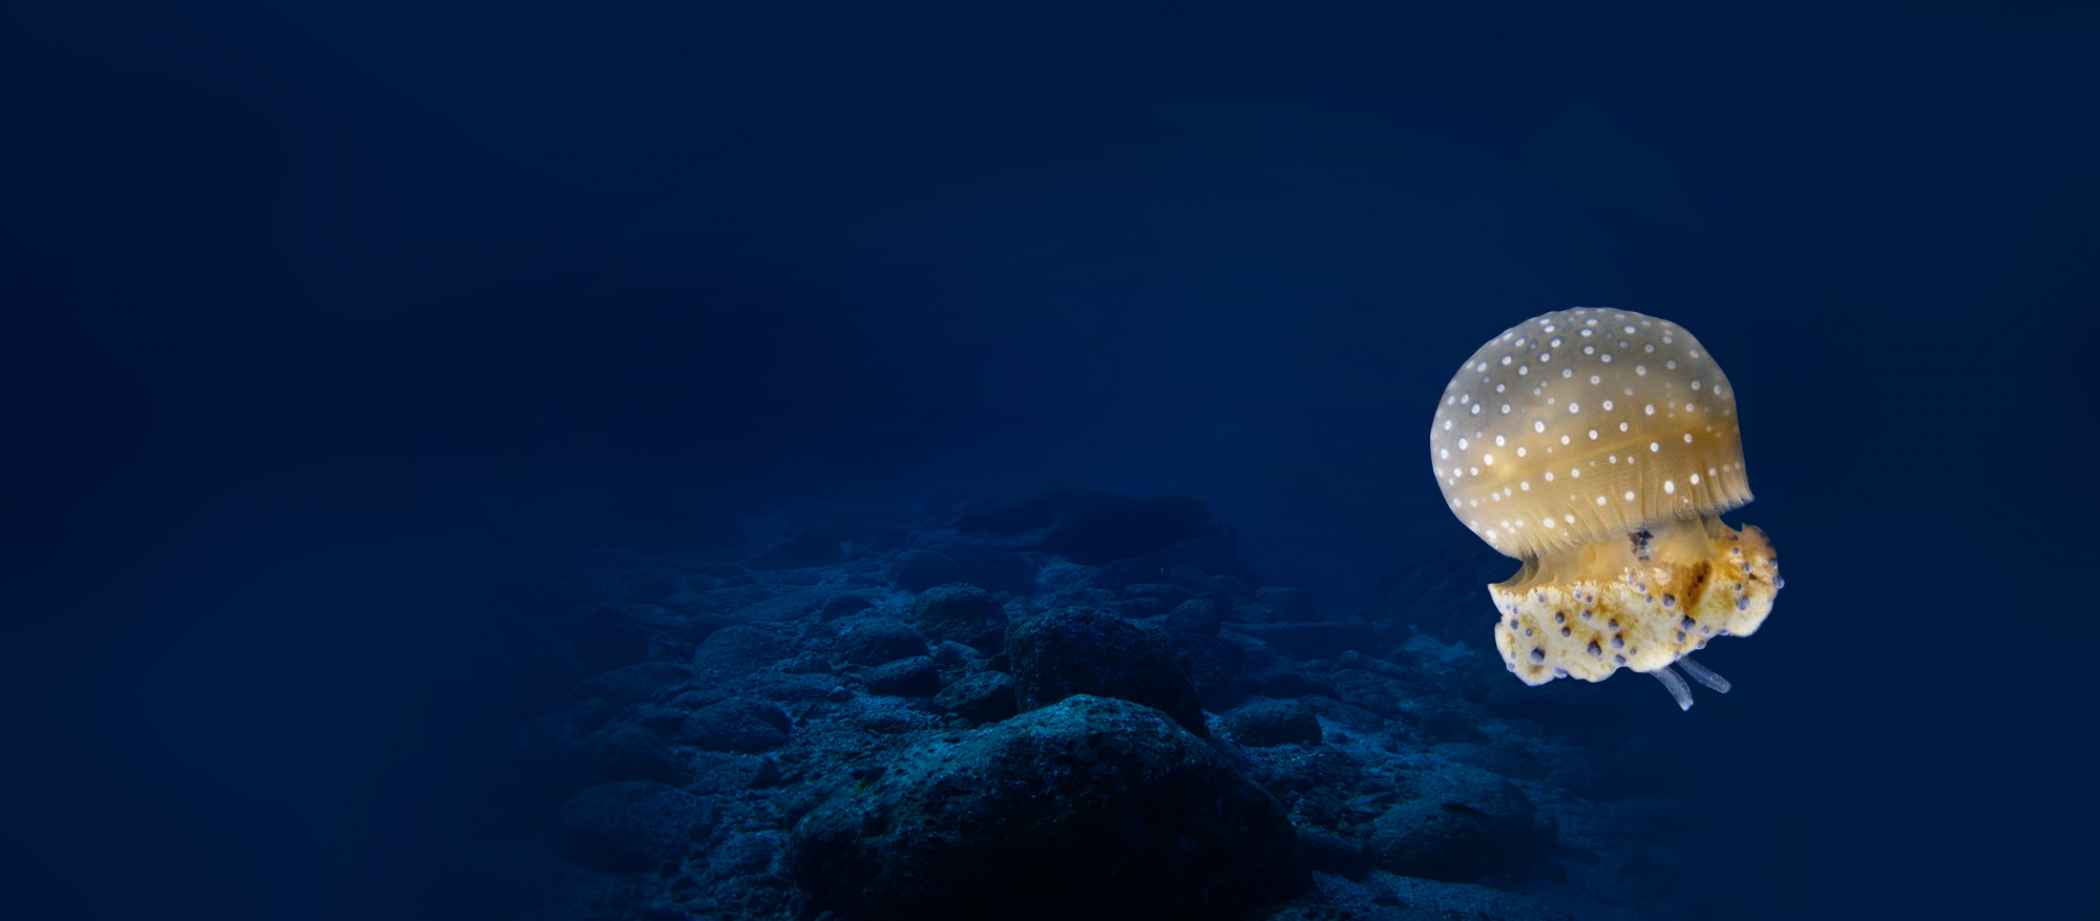 Jellyfish Background 5